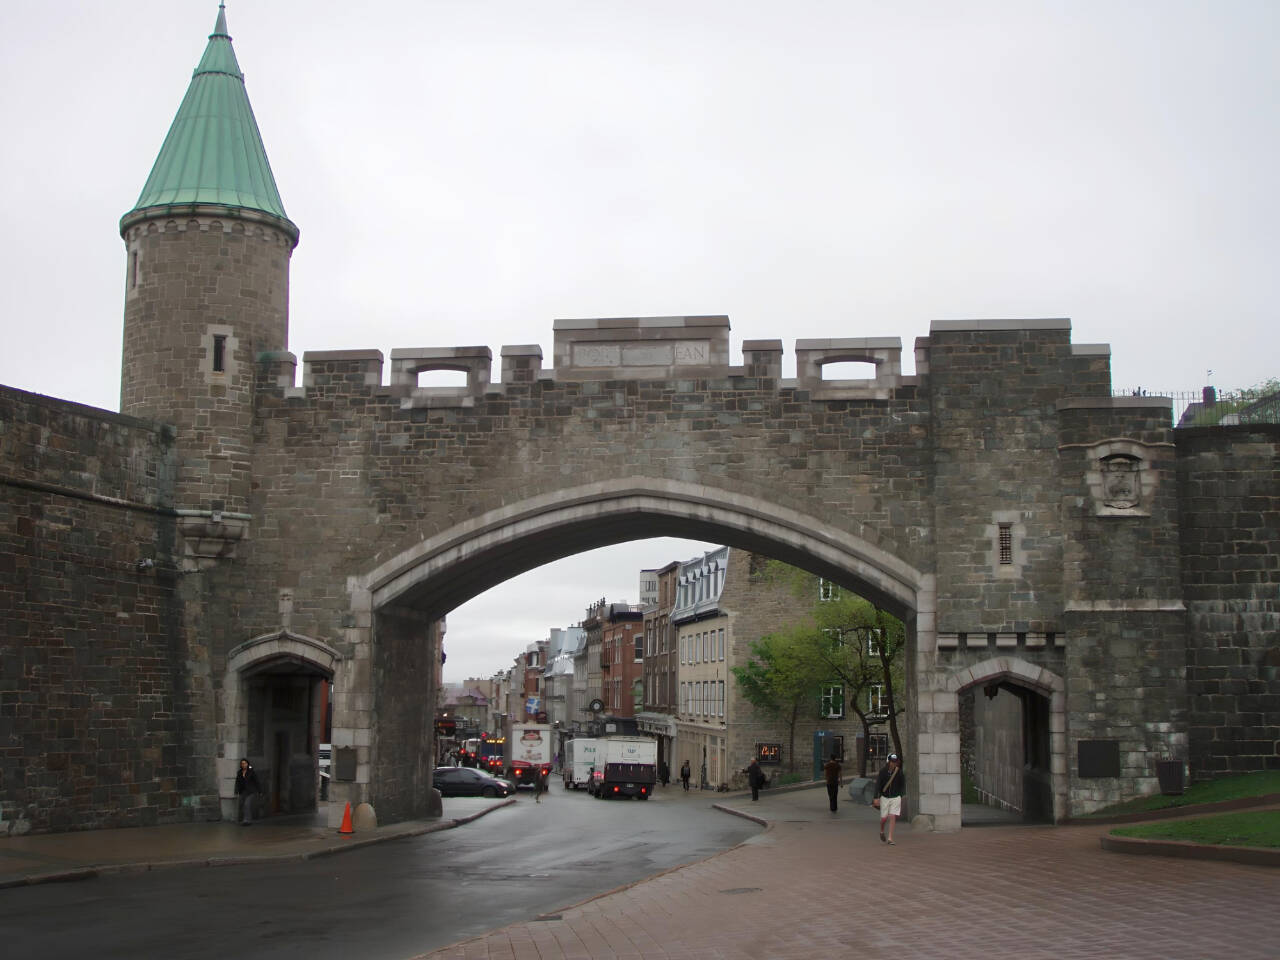 Photos courtesy of Tony and Jen Burgess
The Saint Jean gate into Quebec City.